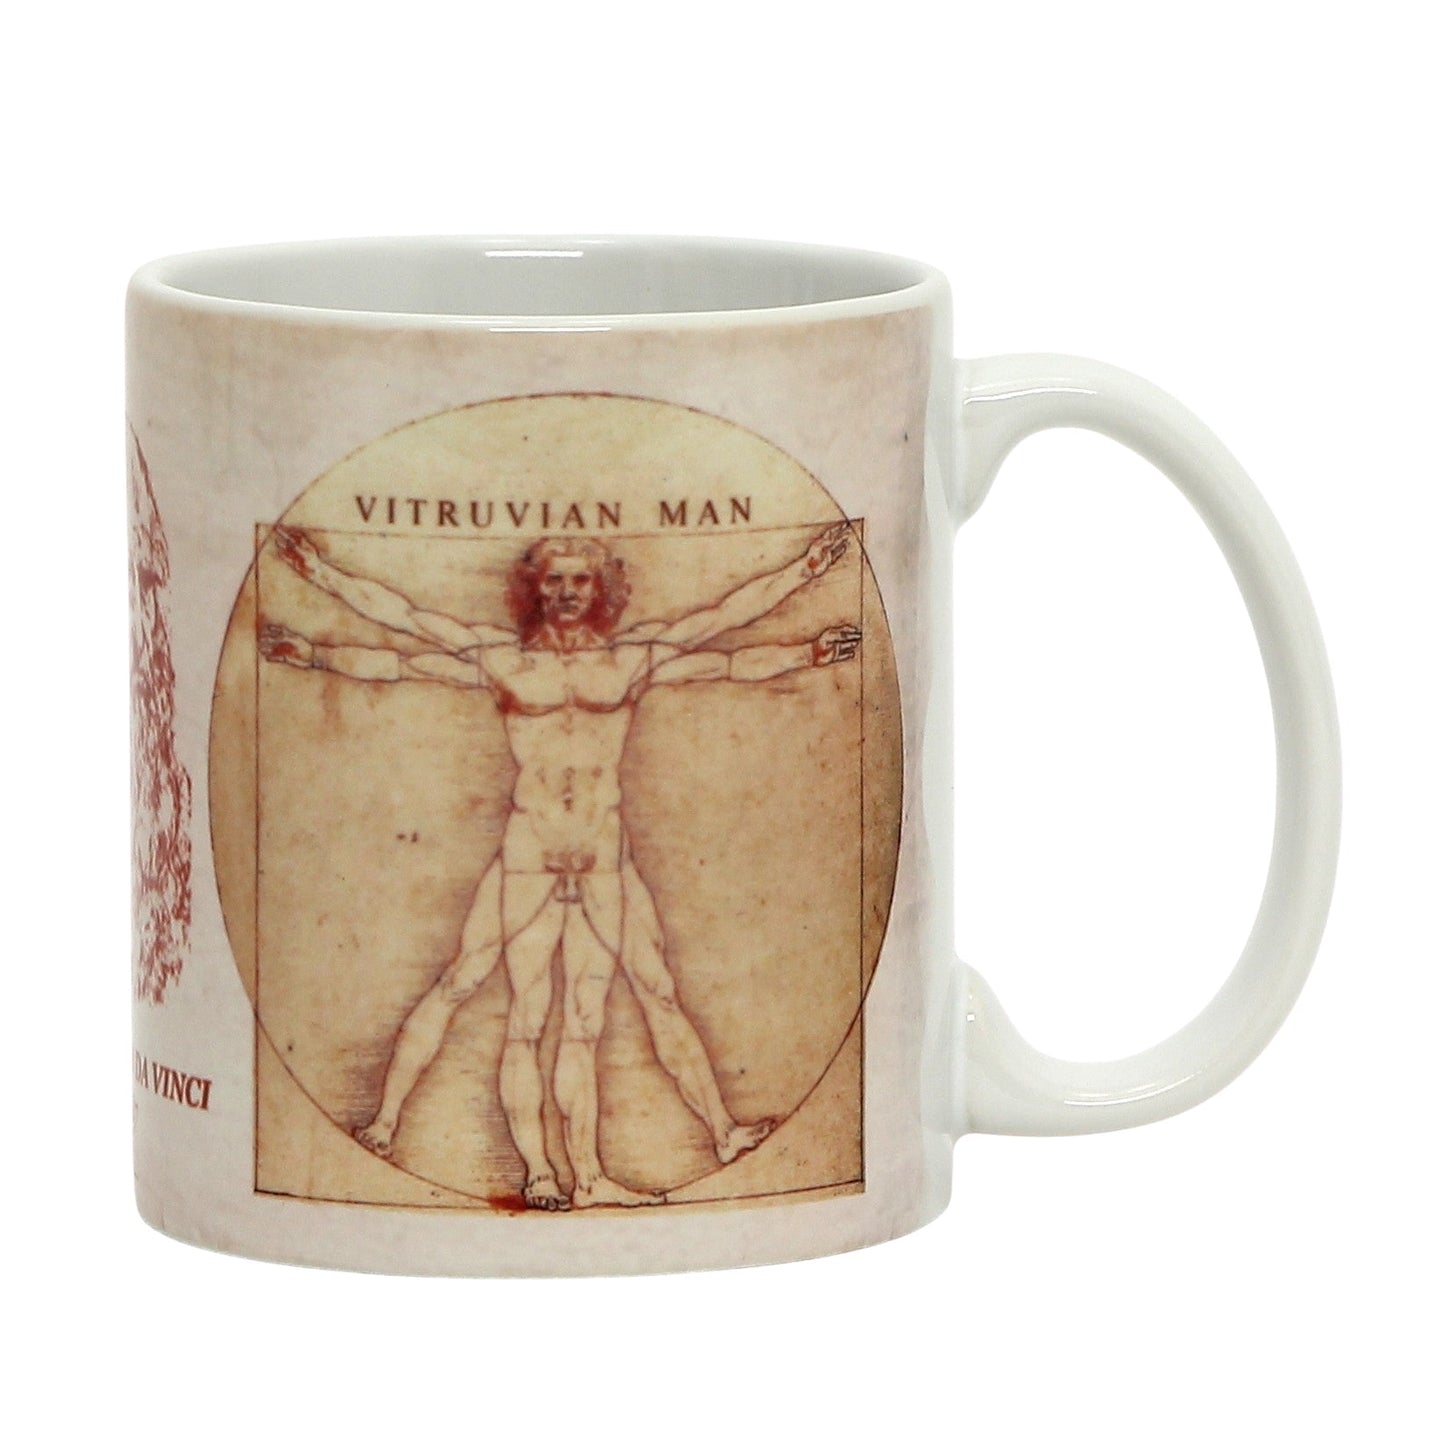 SUBLIMART: Affresco Mug - Vitruvian Man + Vitruvian Woman